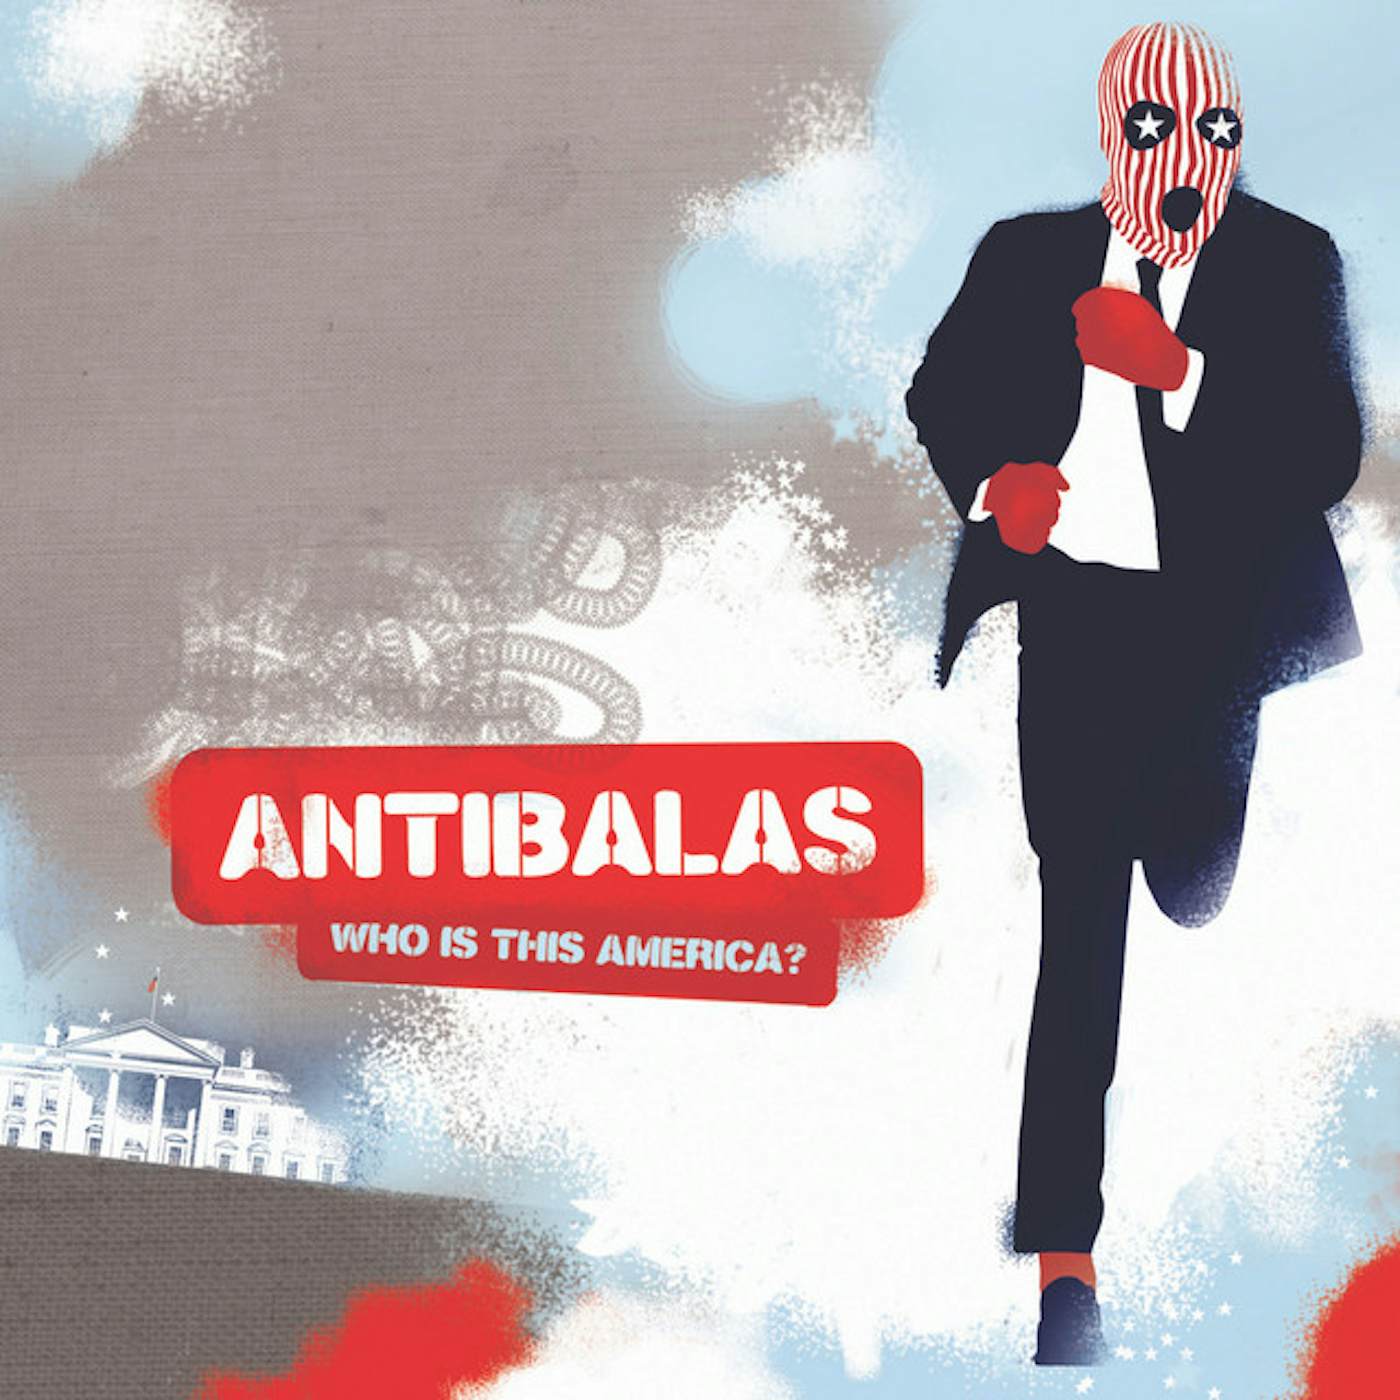 Antibalas WHO IS THIS AMERICA CD